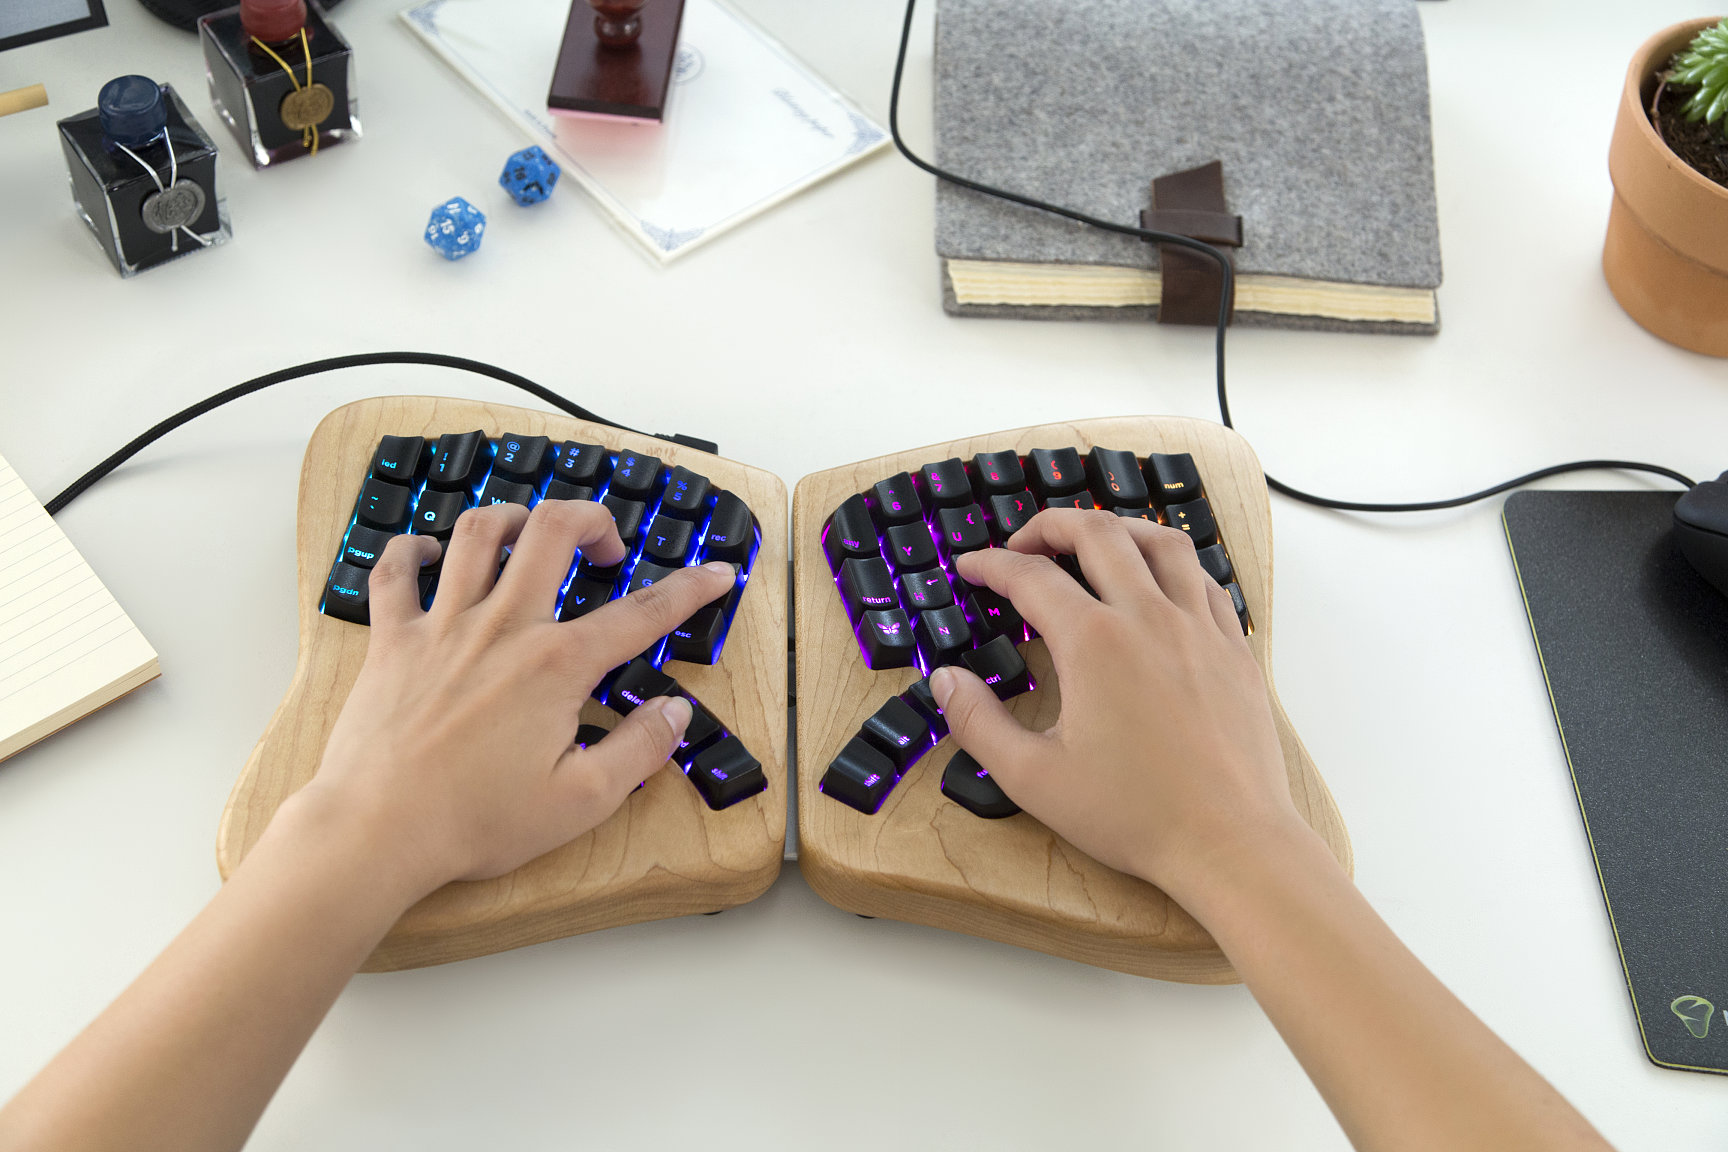 keyboard.io hands on model 01-s